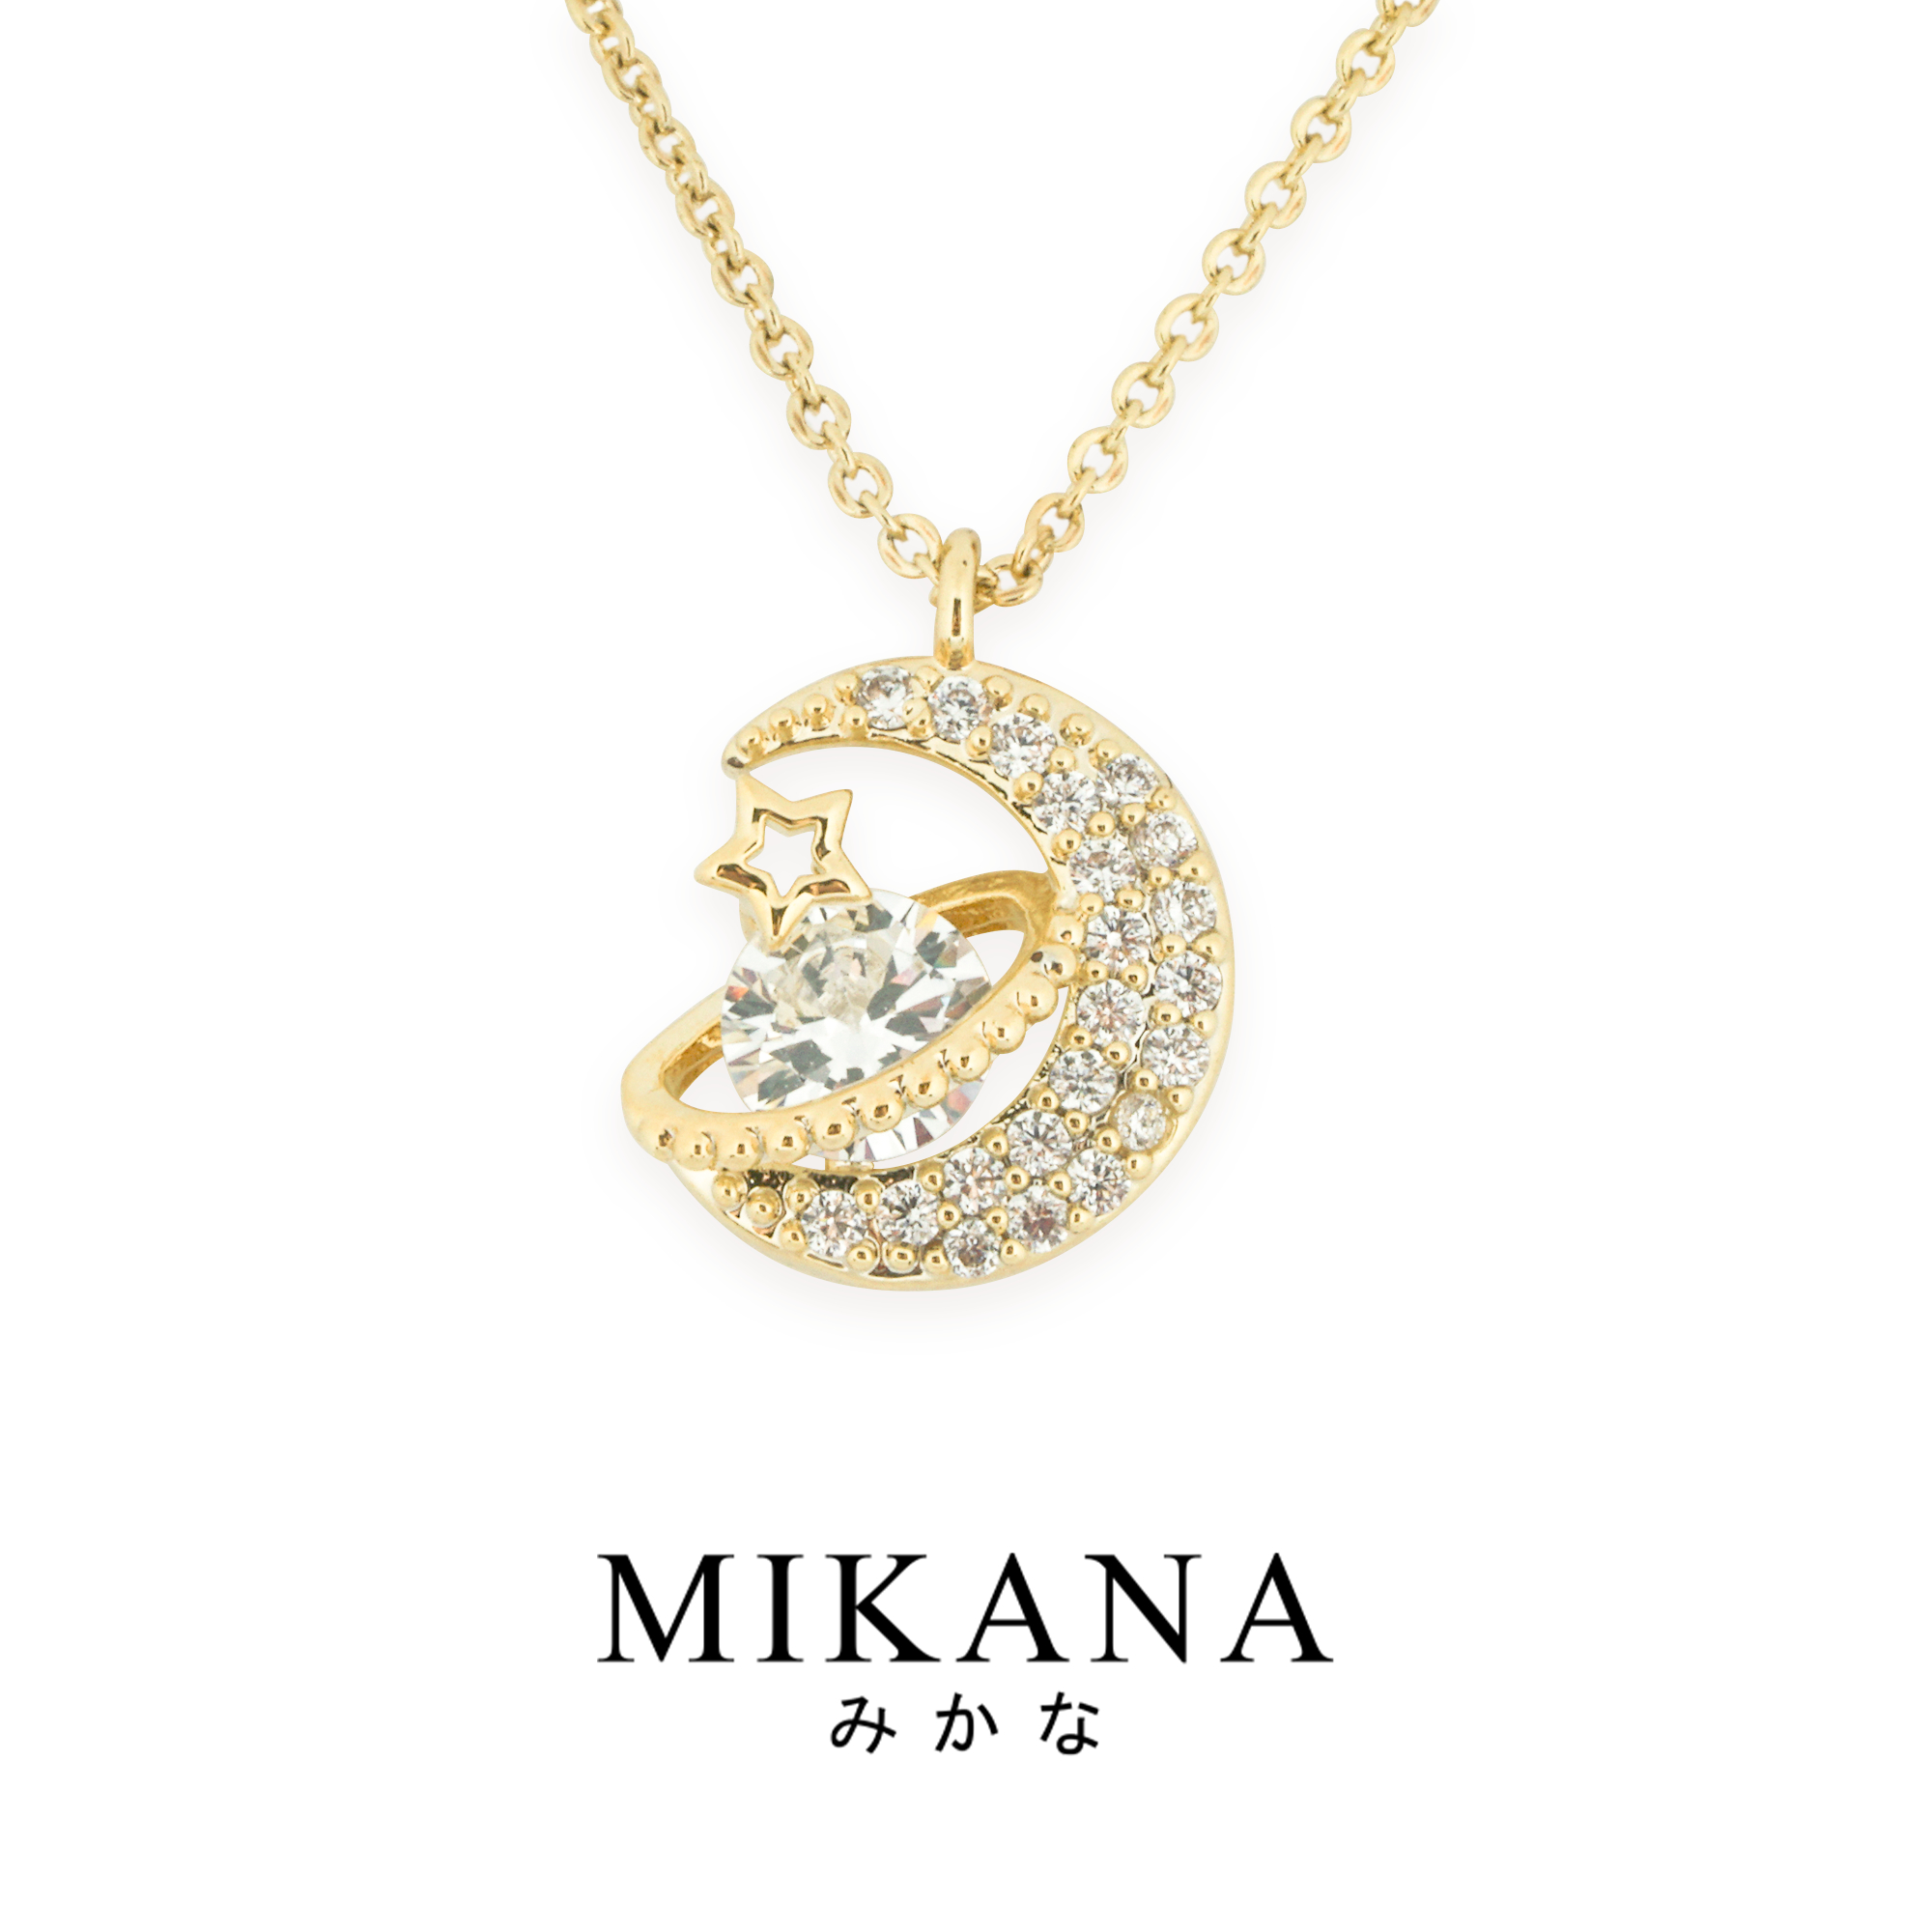 Mikana 18k Gold Plated Hitagi Pendant Necklace - Fashion Accessory